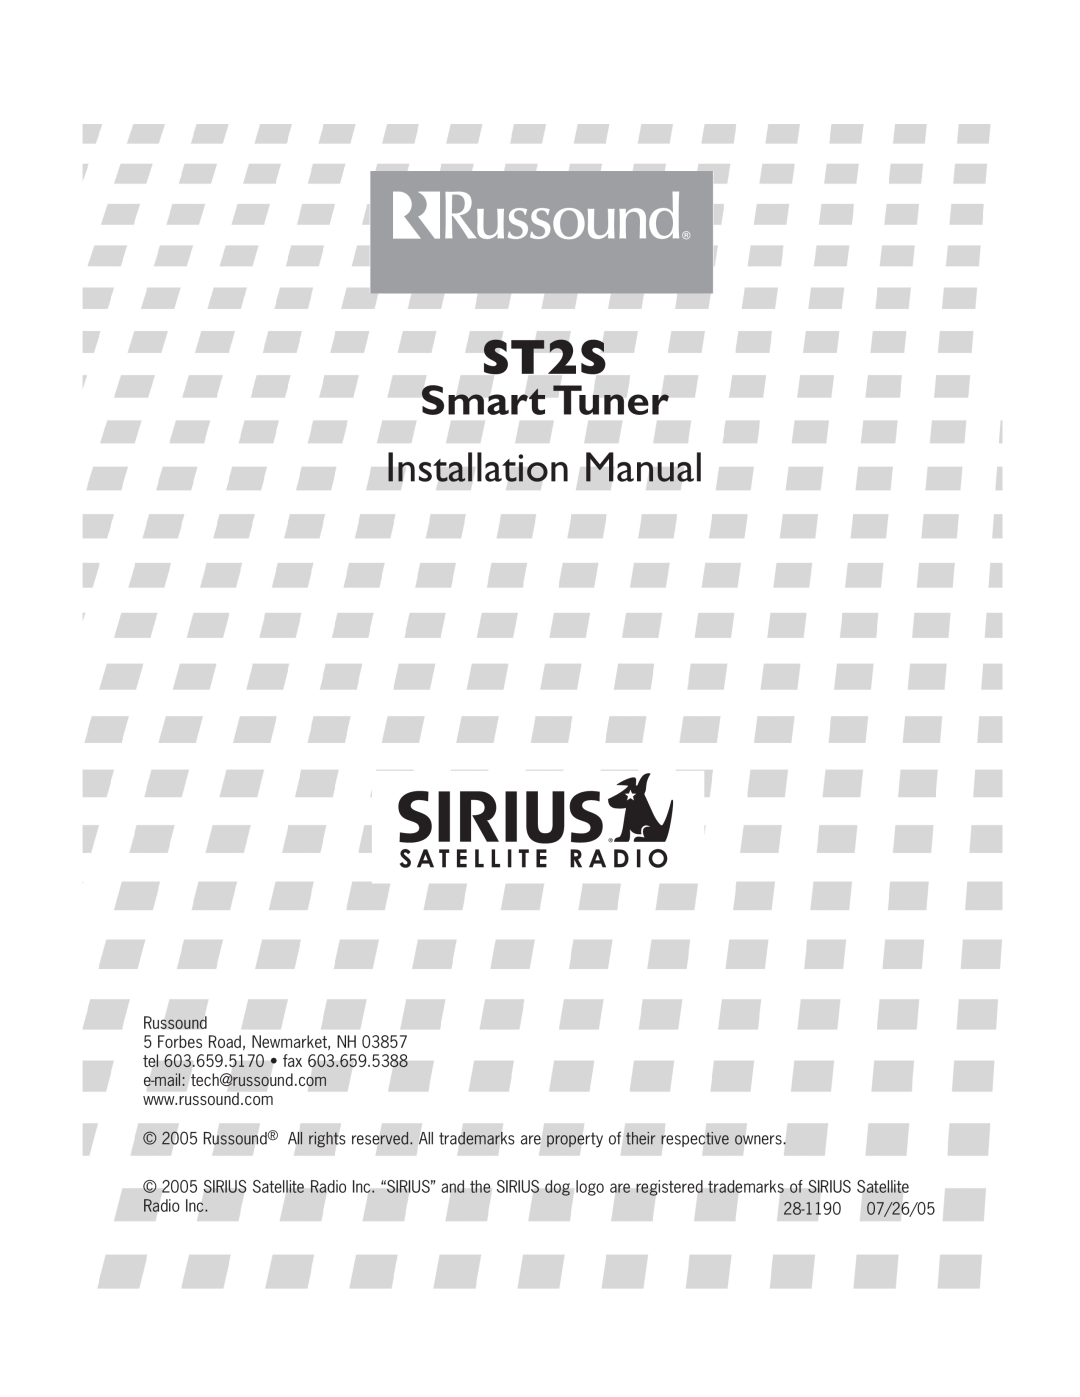 Russound ST2S installation manual Smart Tuner, Installation Manual, Russound, 2005, Radio Inc, 28-119007/26/05 